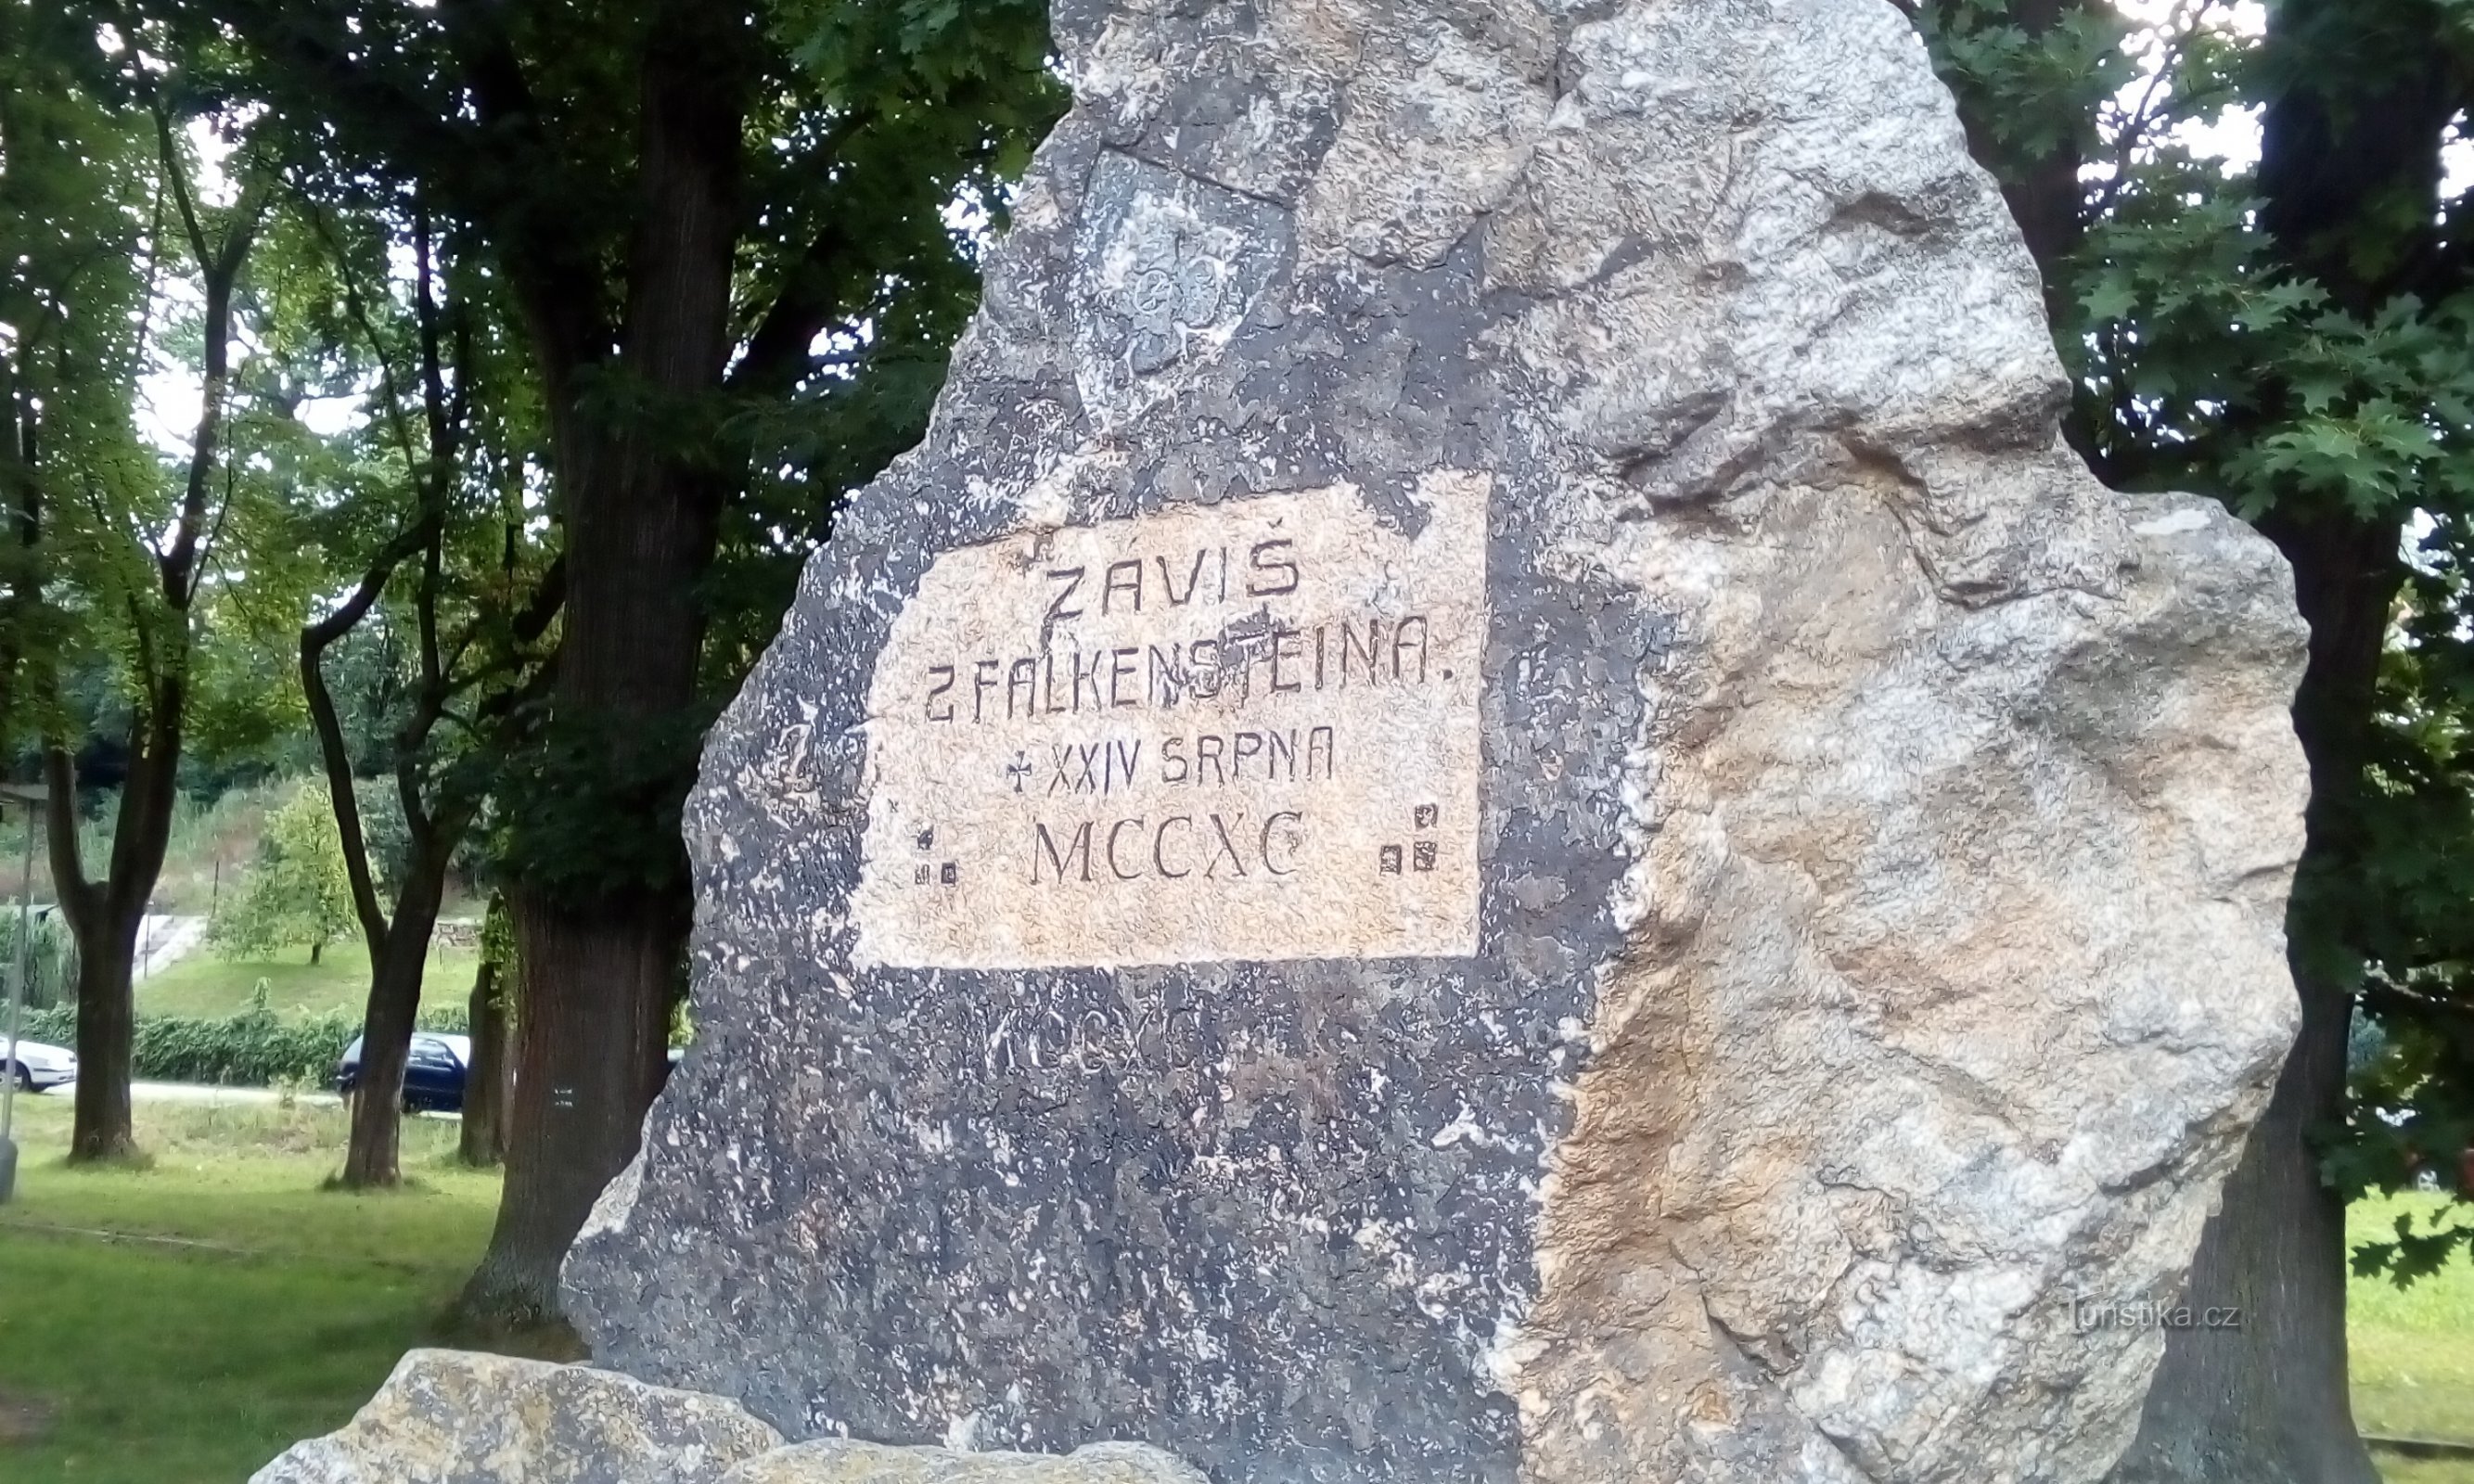 Falkensteini Závis emlékműve